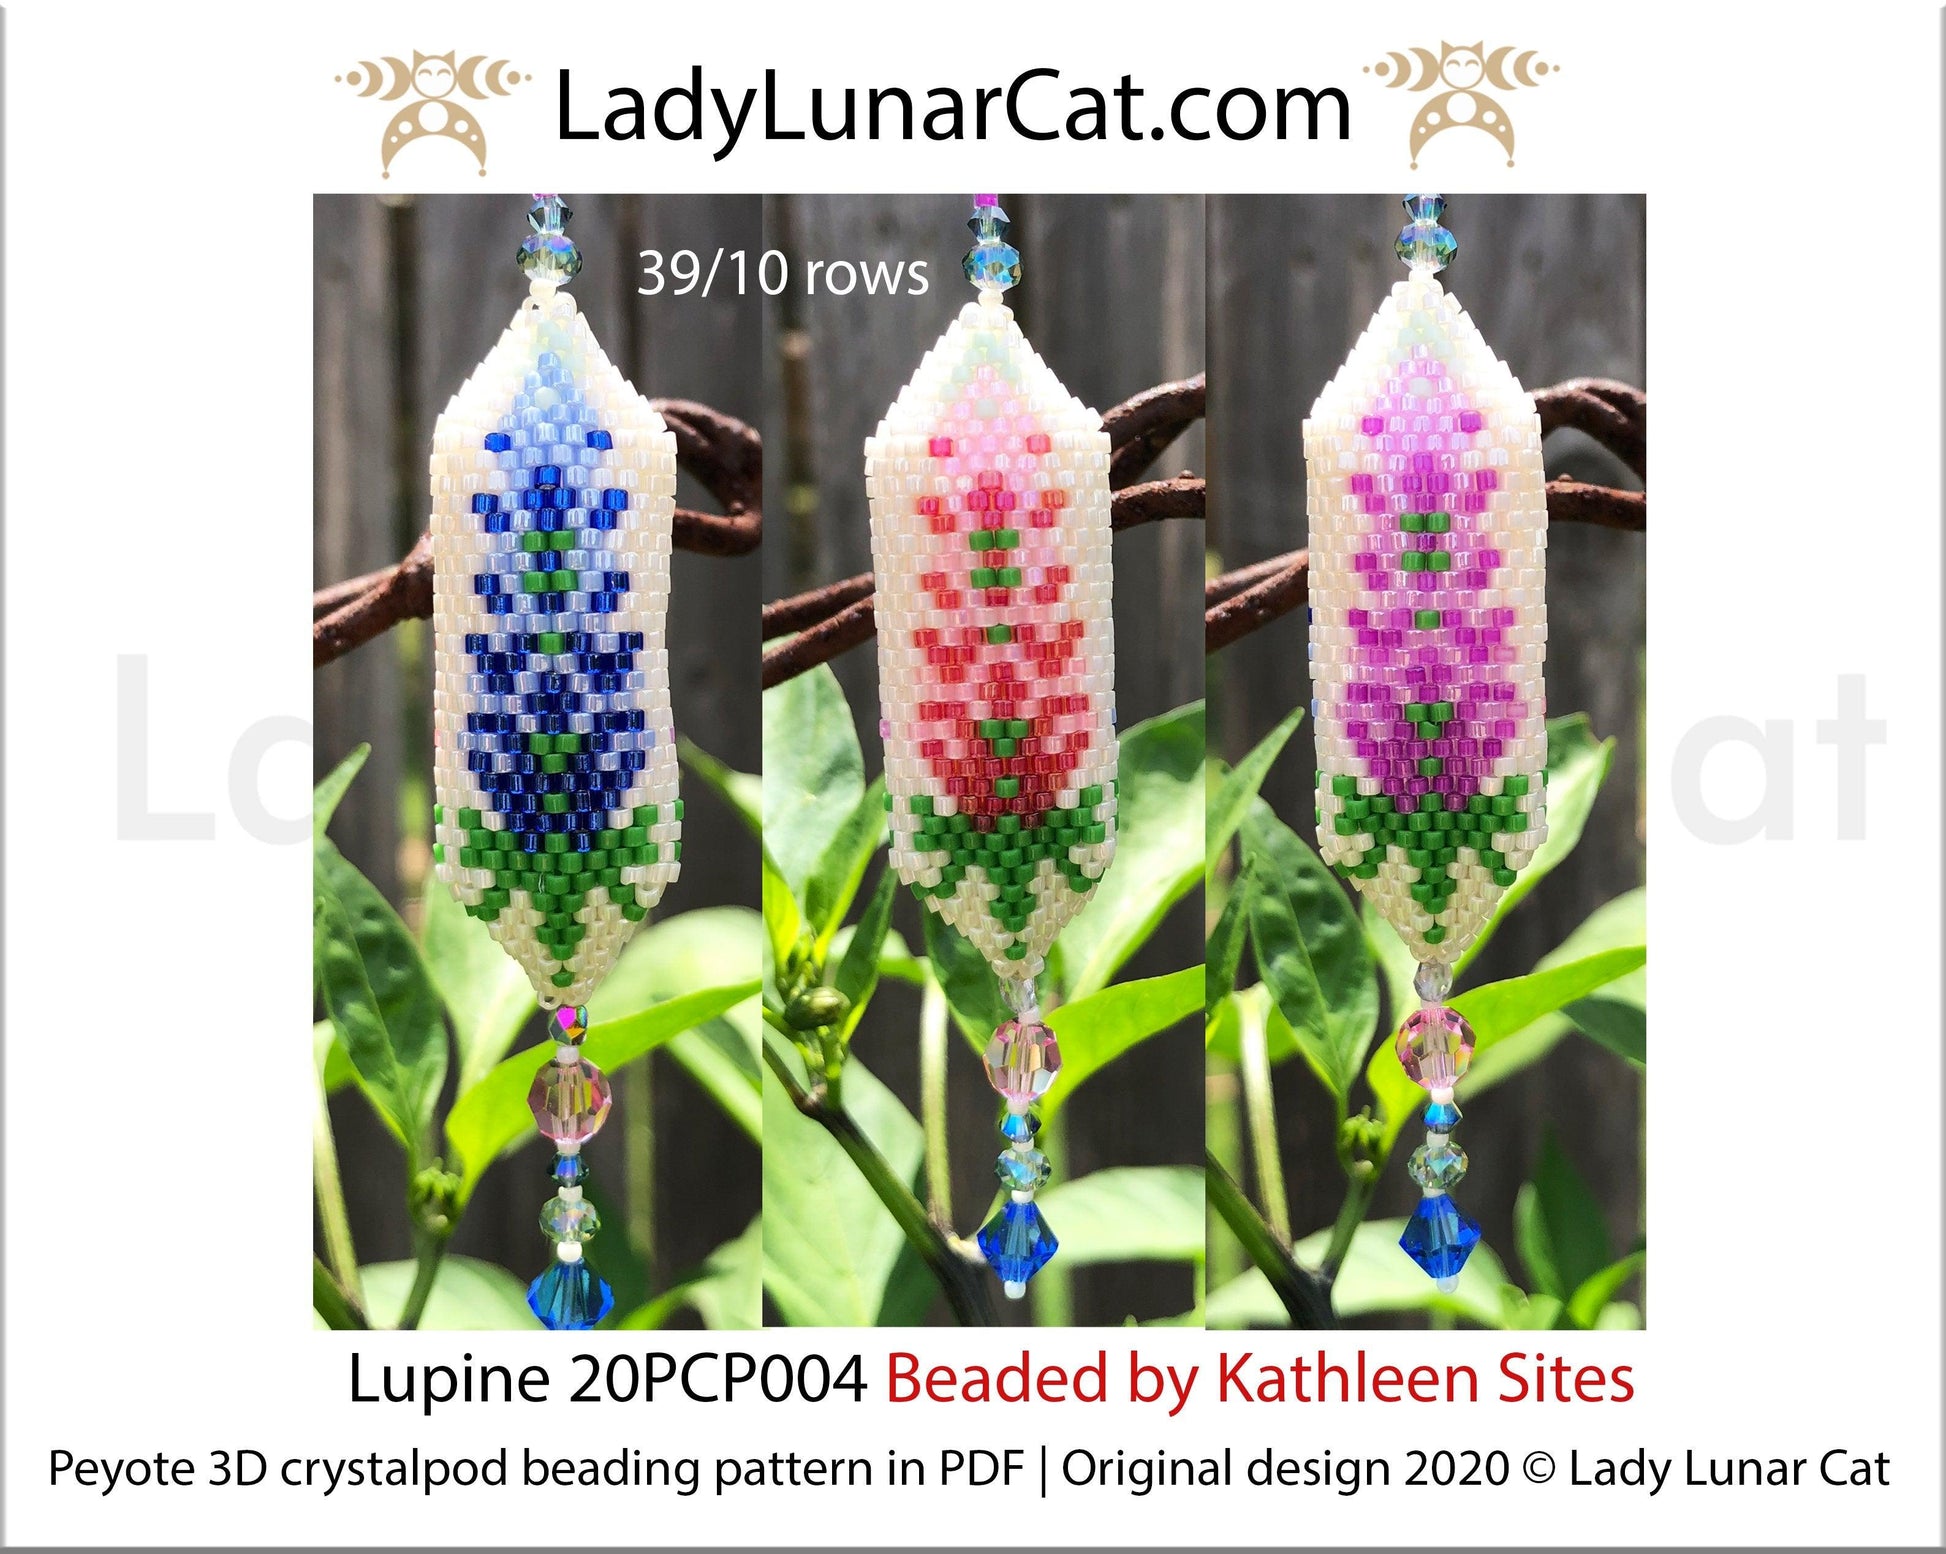 3d peyote pod pattern or crystalpod pattern for beading Lupine 20PCP004 LadyLunarCat